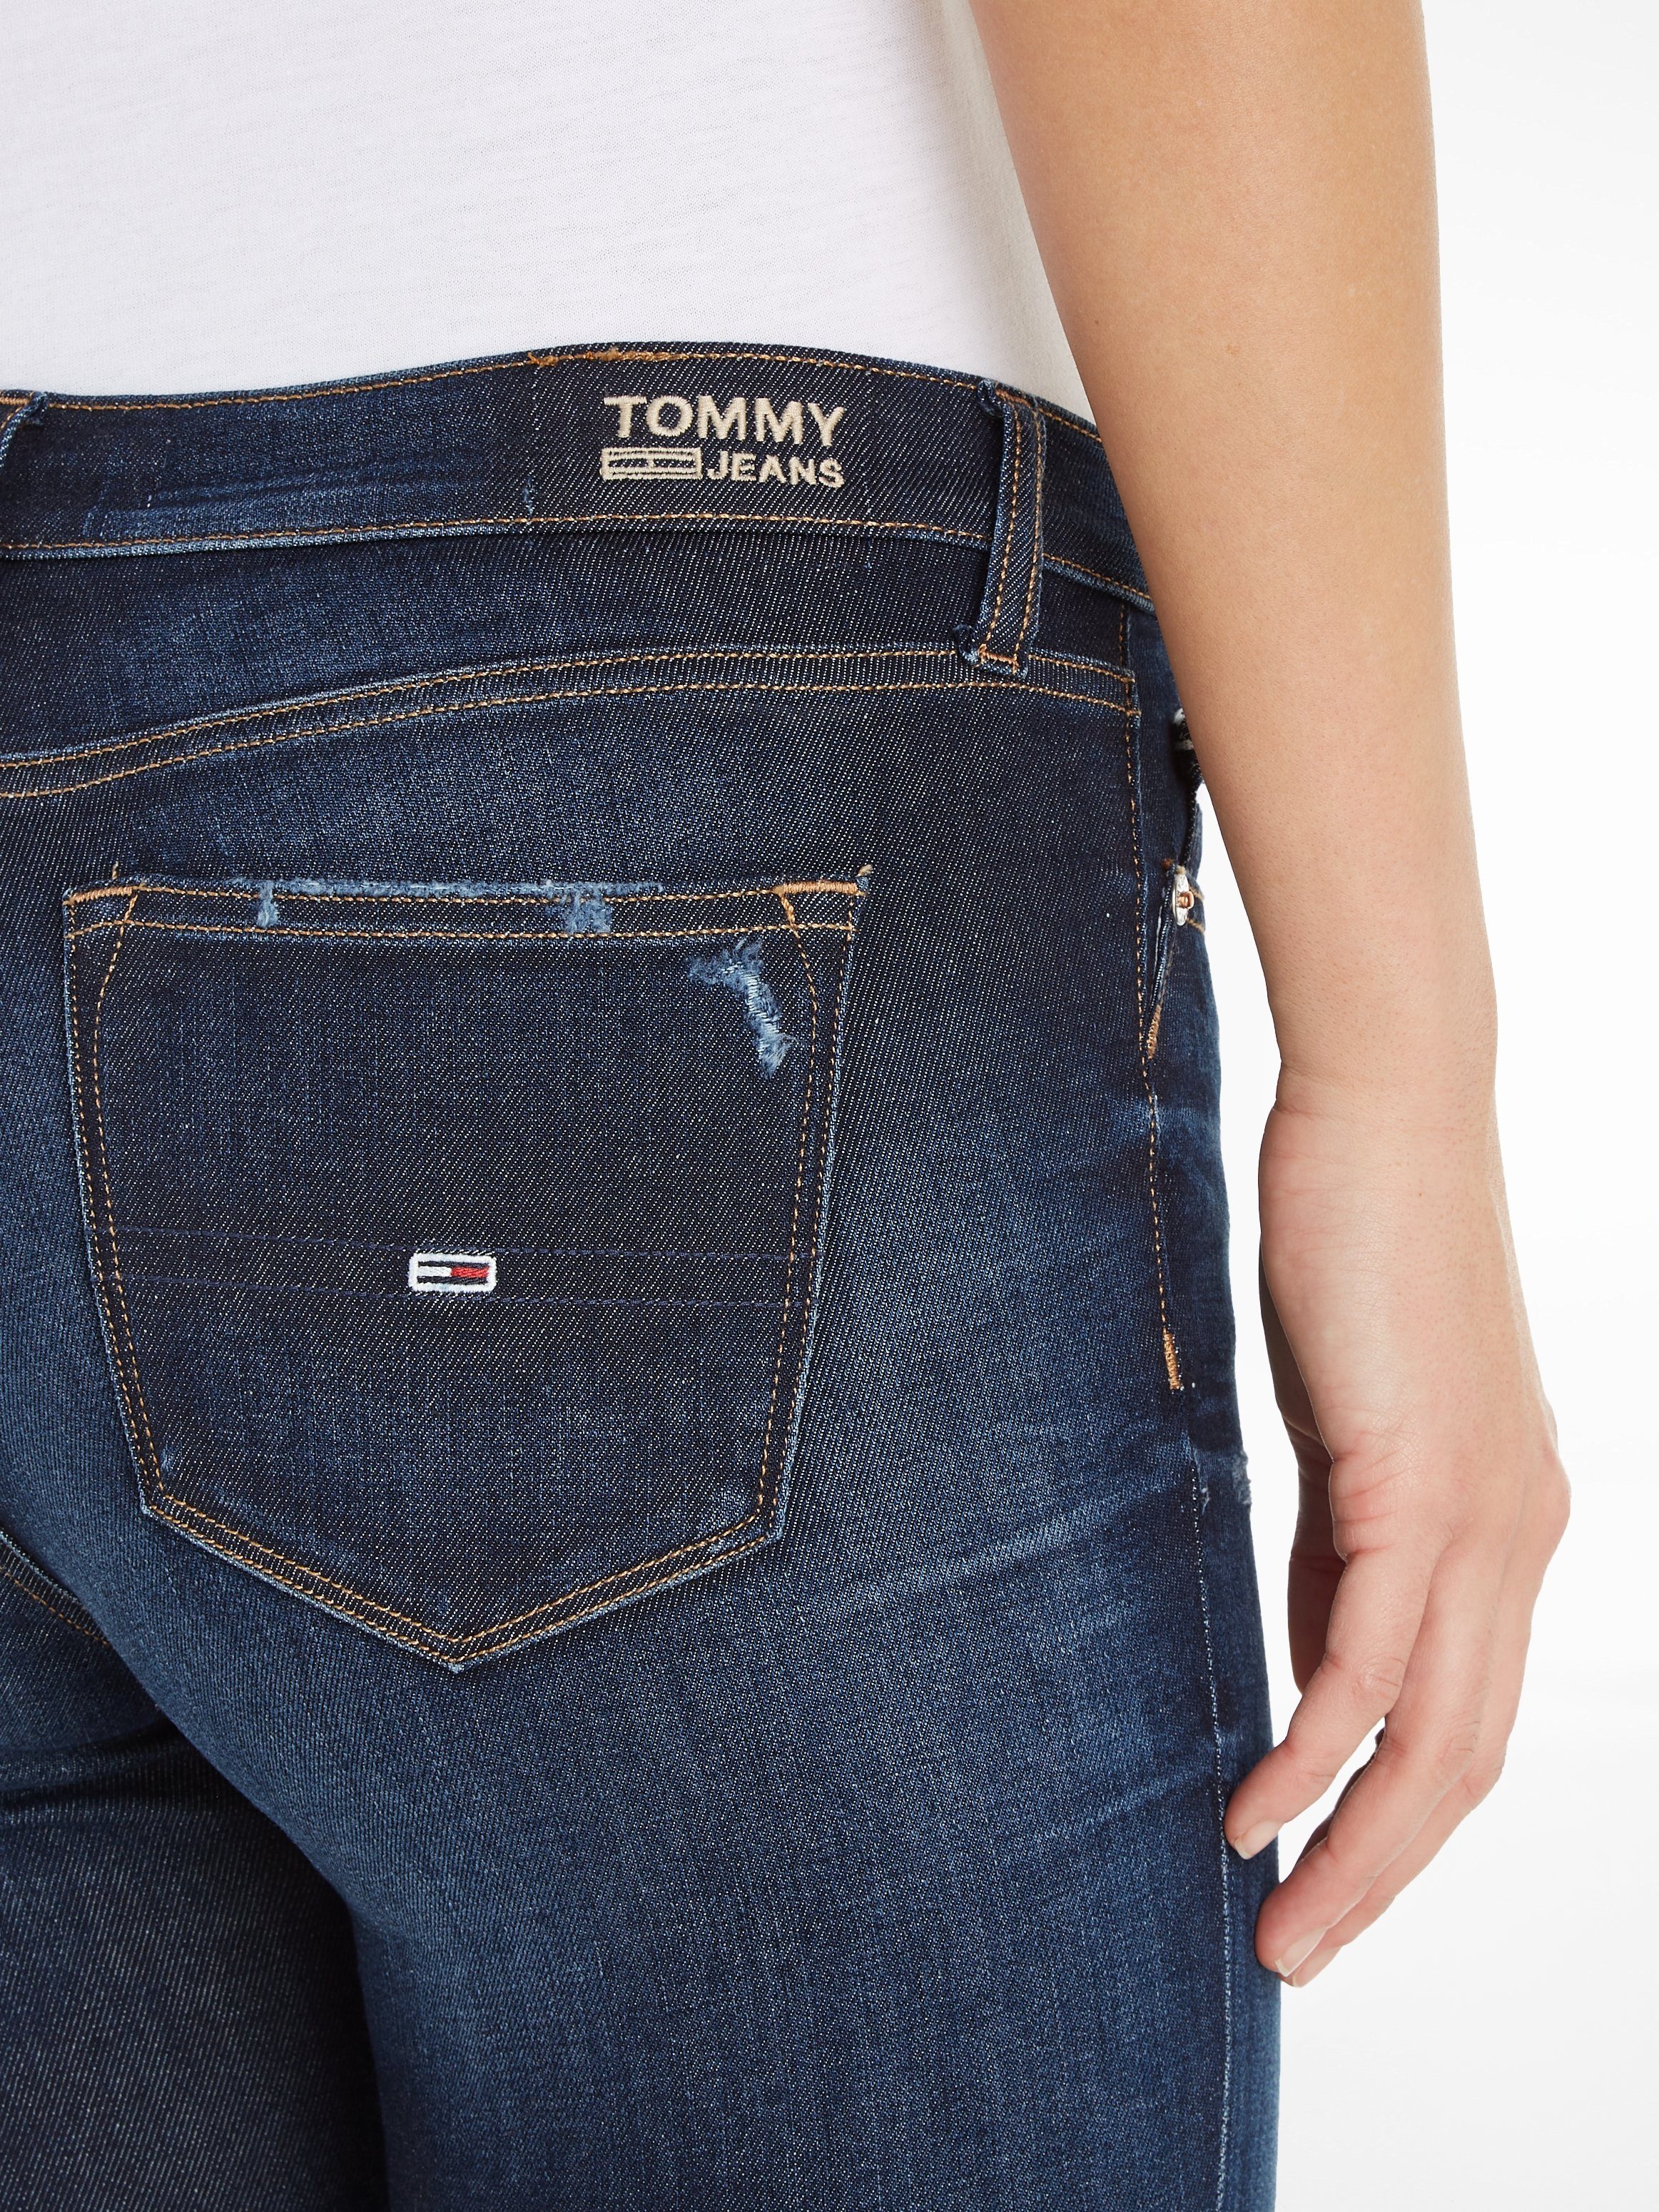 Jeans Tommy Jeans Tommy Denim_dark mit Skinny-fit-Jeans Markenlabel